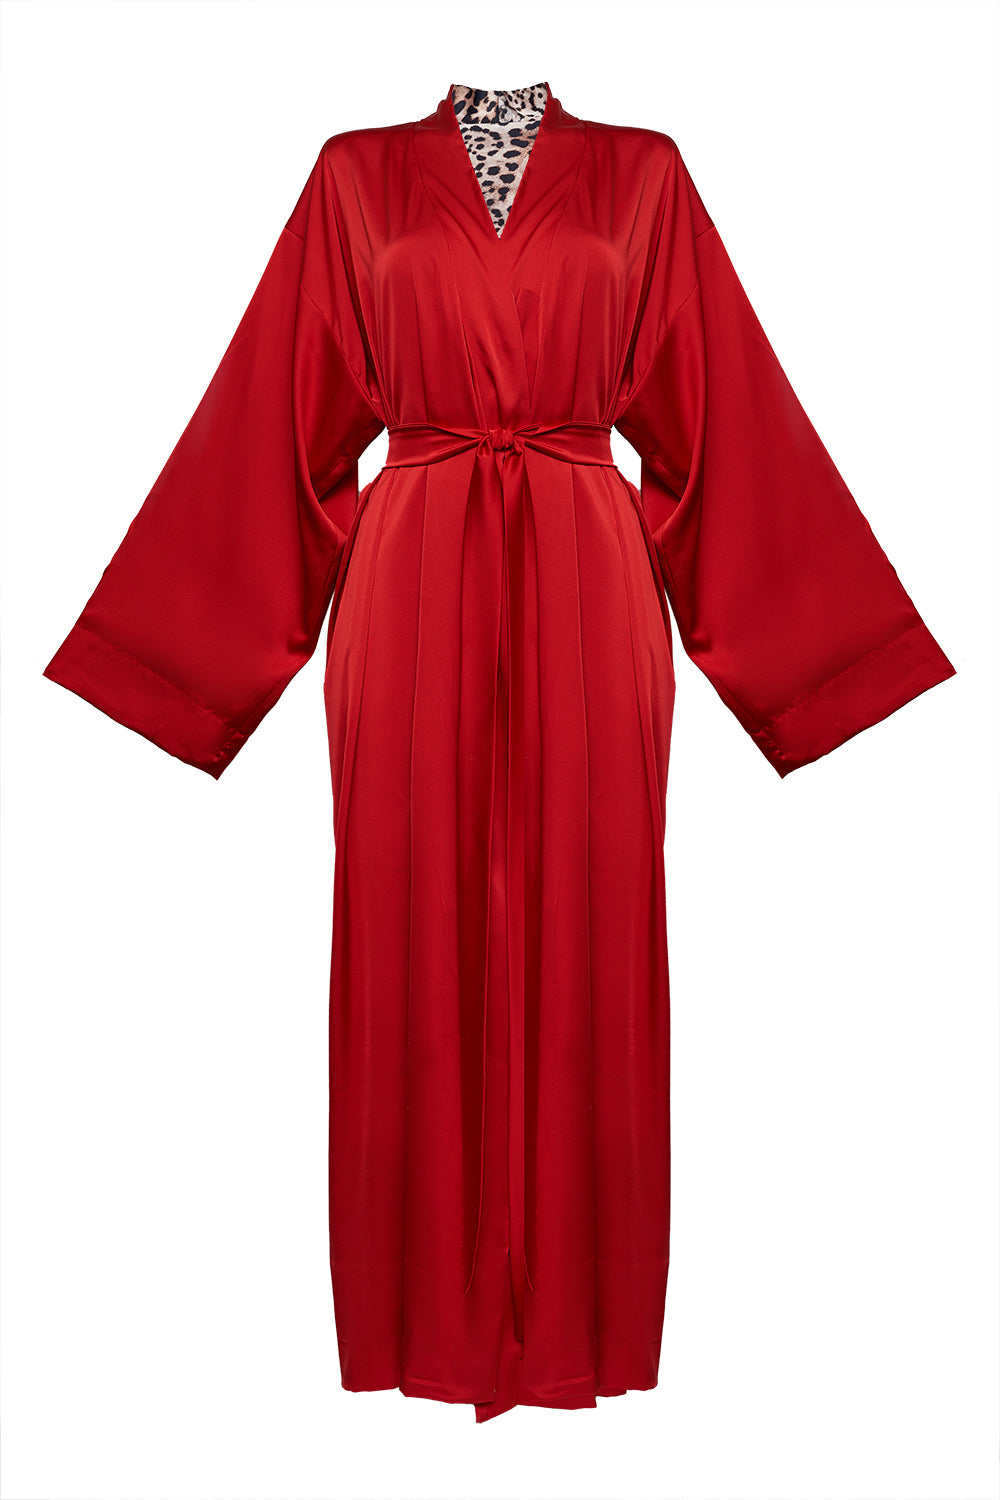 Kasumi Leo red kimono robe by Komarova